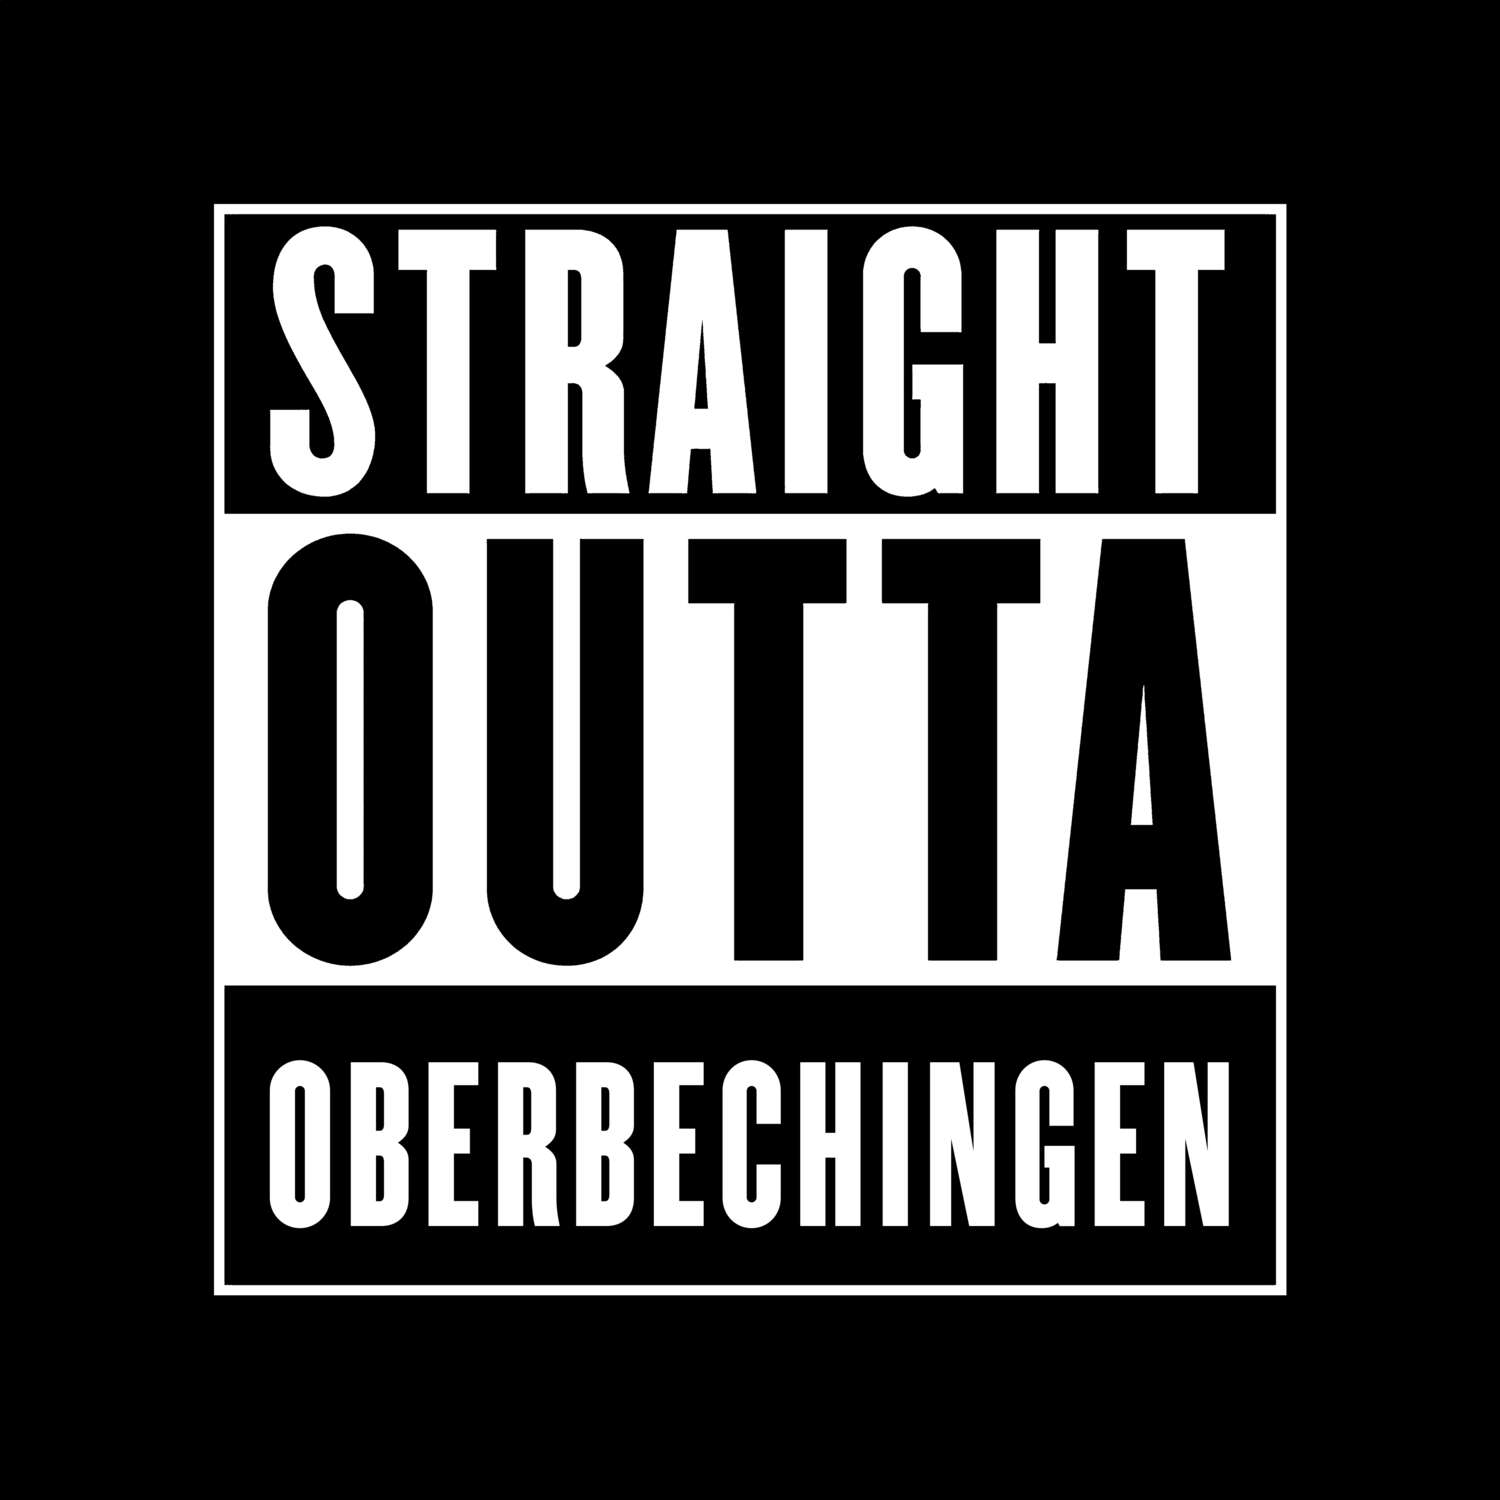 Oberbechingen T-Shirt »Straight Outta«